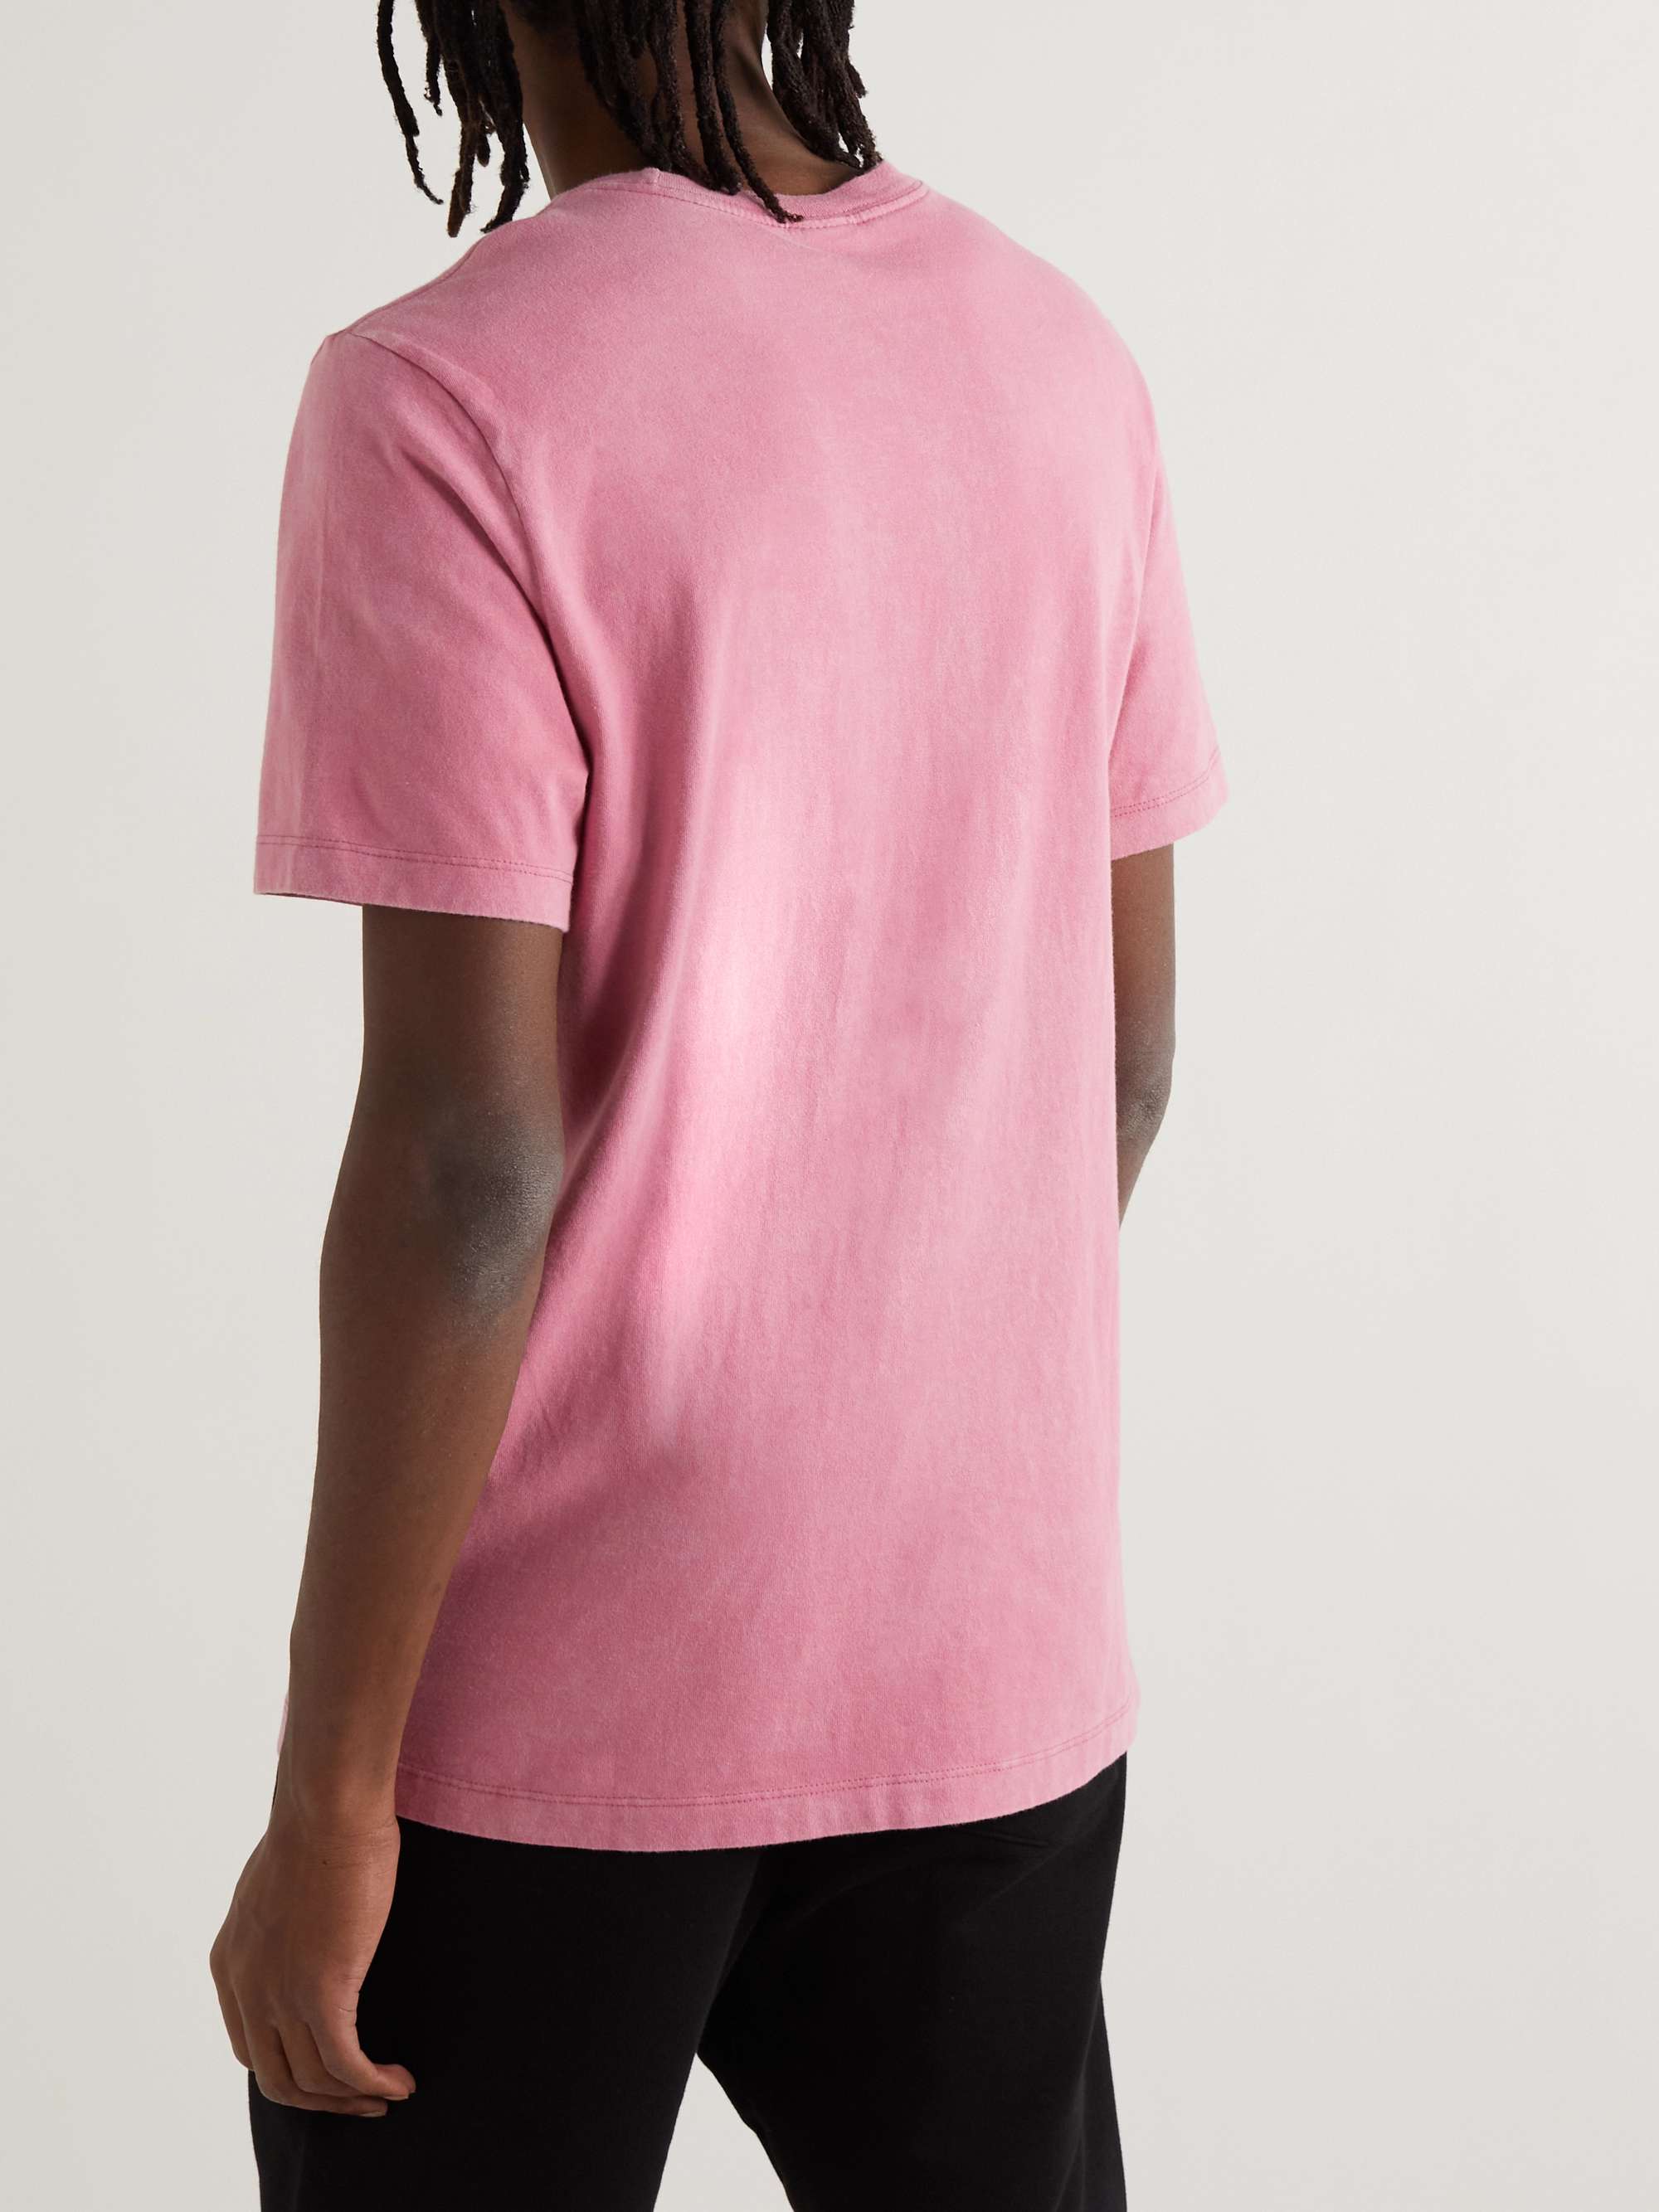 NIKE Logo-Print Garment-Dyed Cotton-Jersey T-Shirt